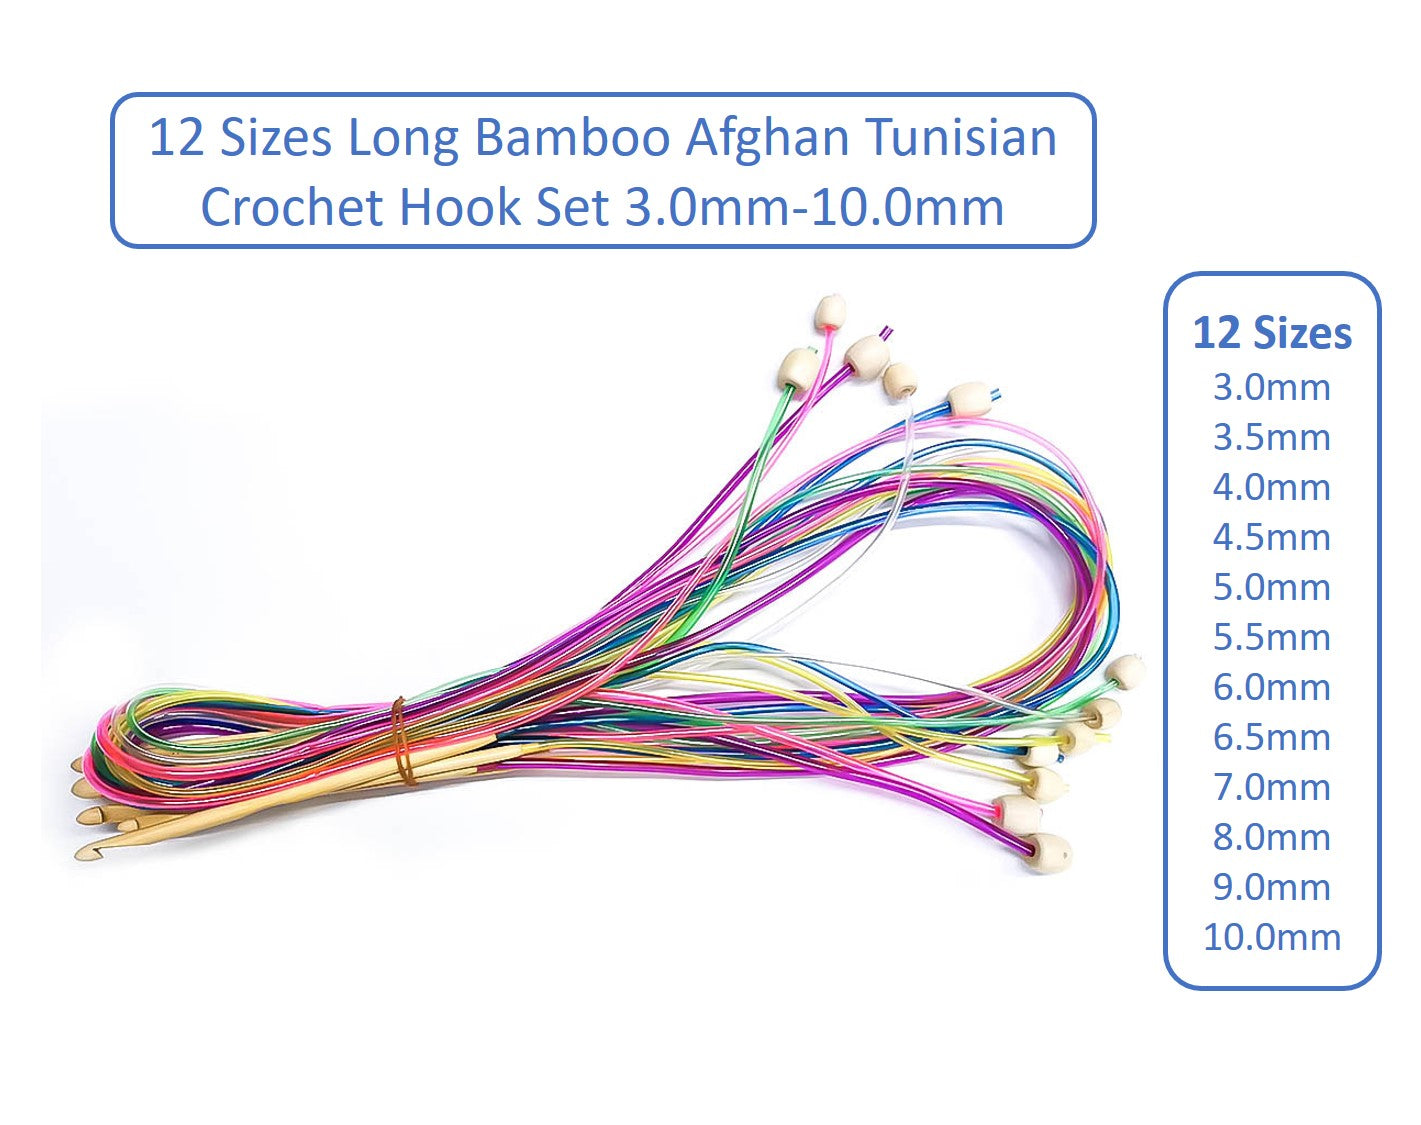 12 Sizes 120cm Long Bamboo Afghan Tunisian Crochet Hook Set 3.0mm-10.0mm